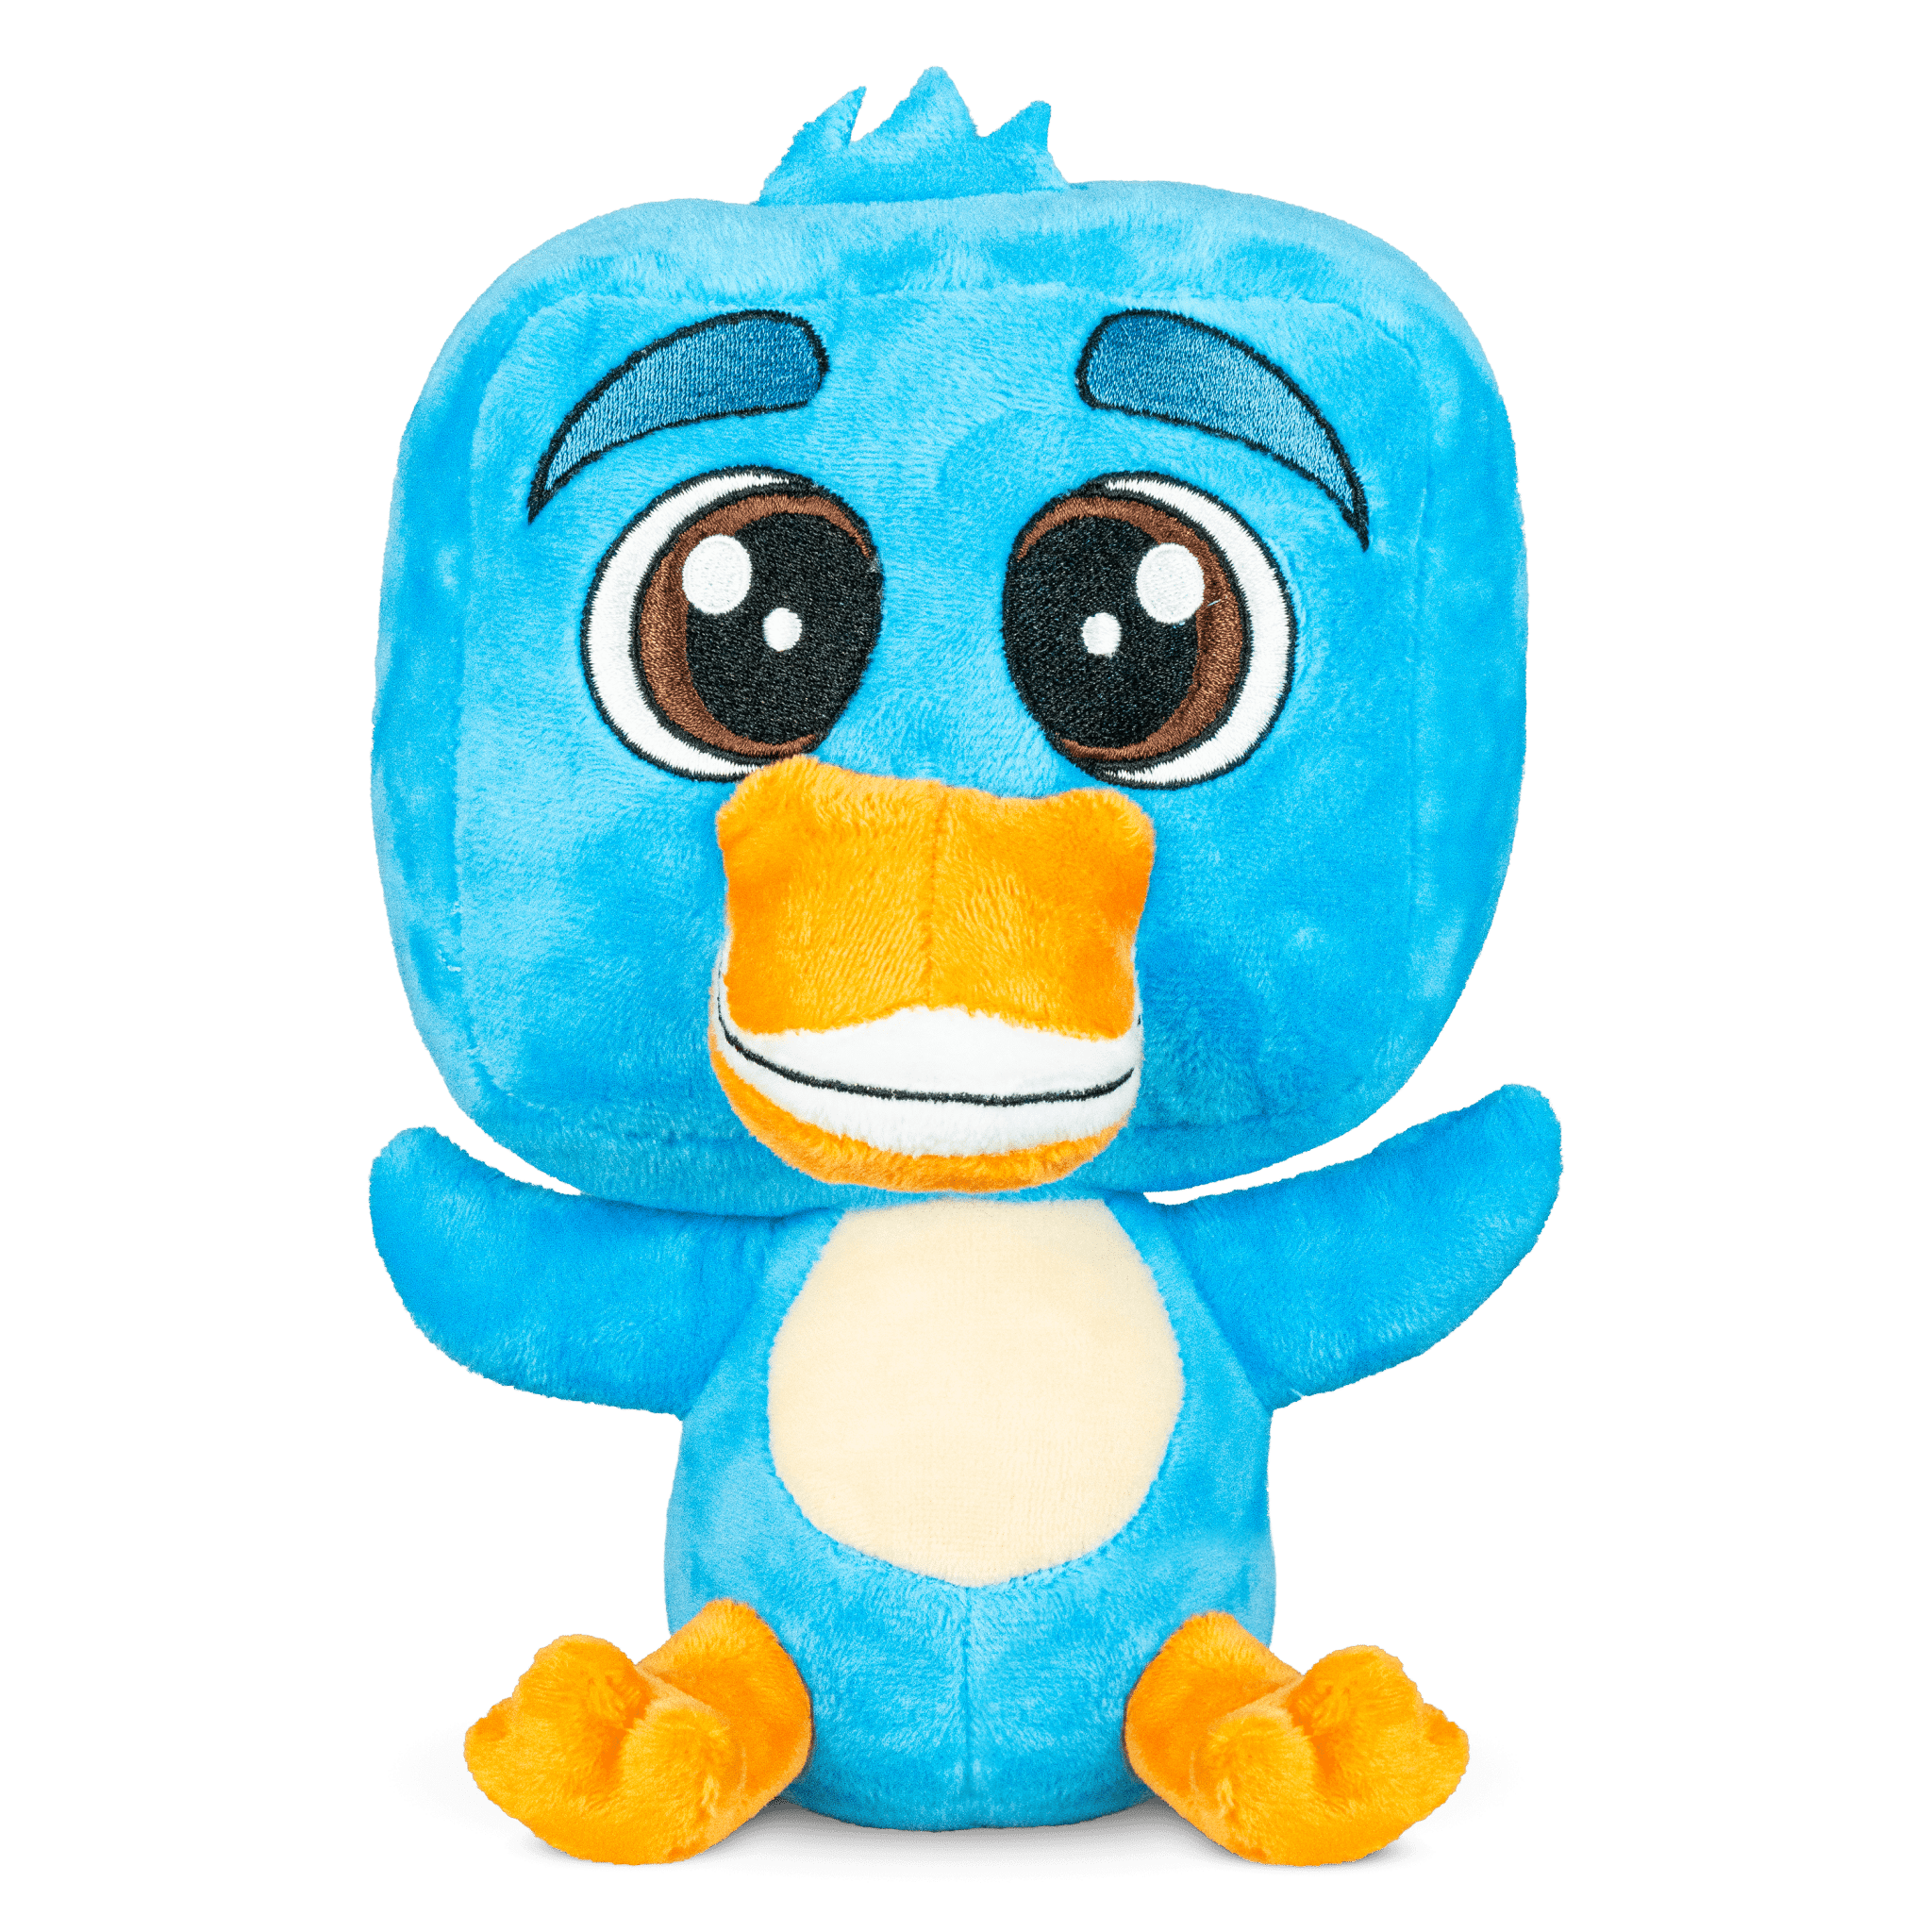 Fozo Plush Toy Bundle - Fozo